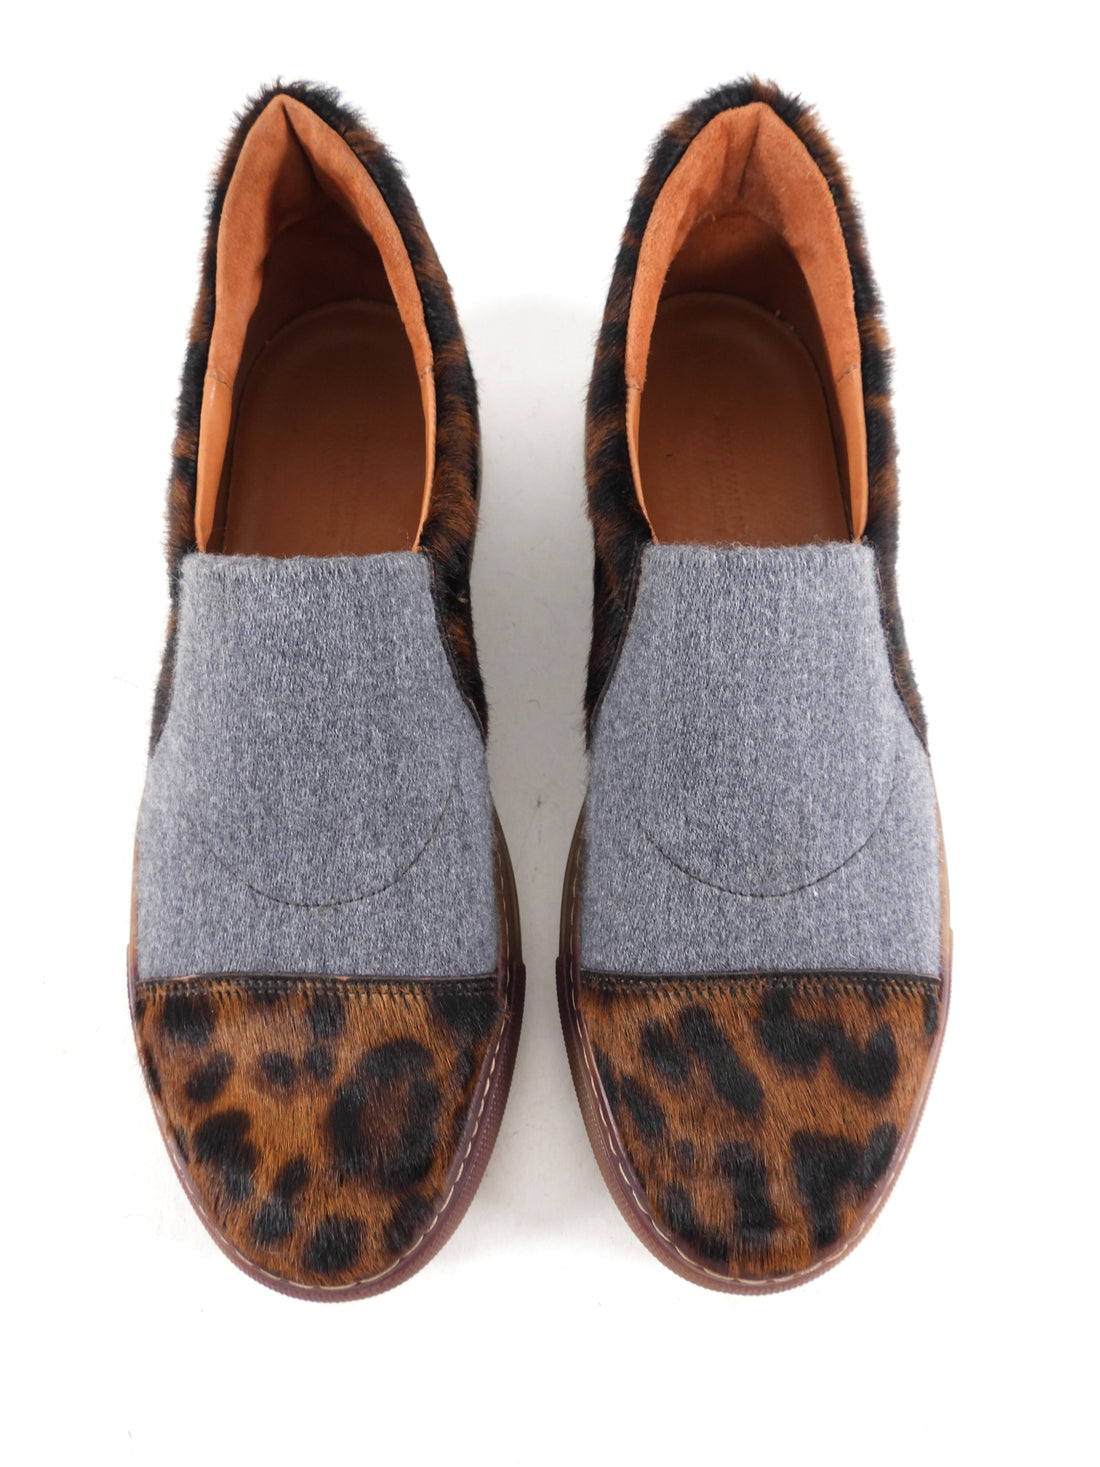 Dries Van Noten Leopard Calf Hair Flat Sneakers - 36.5